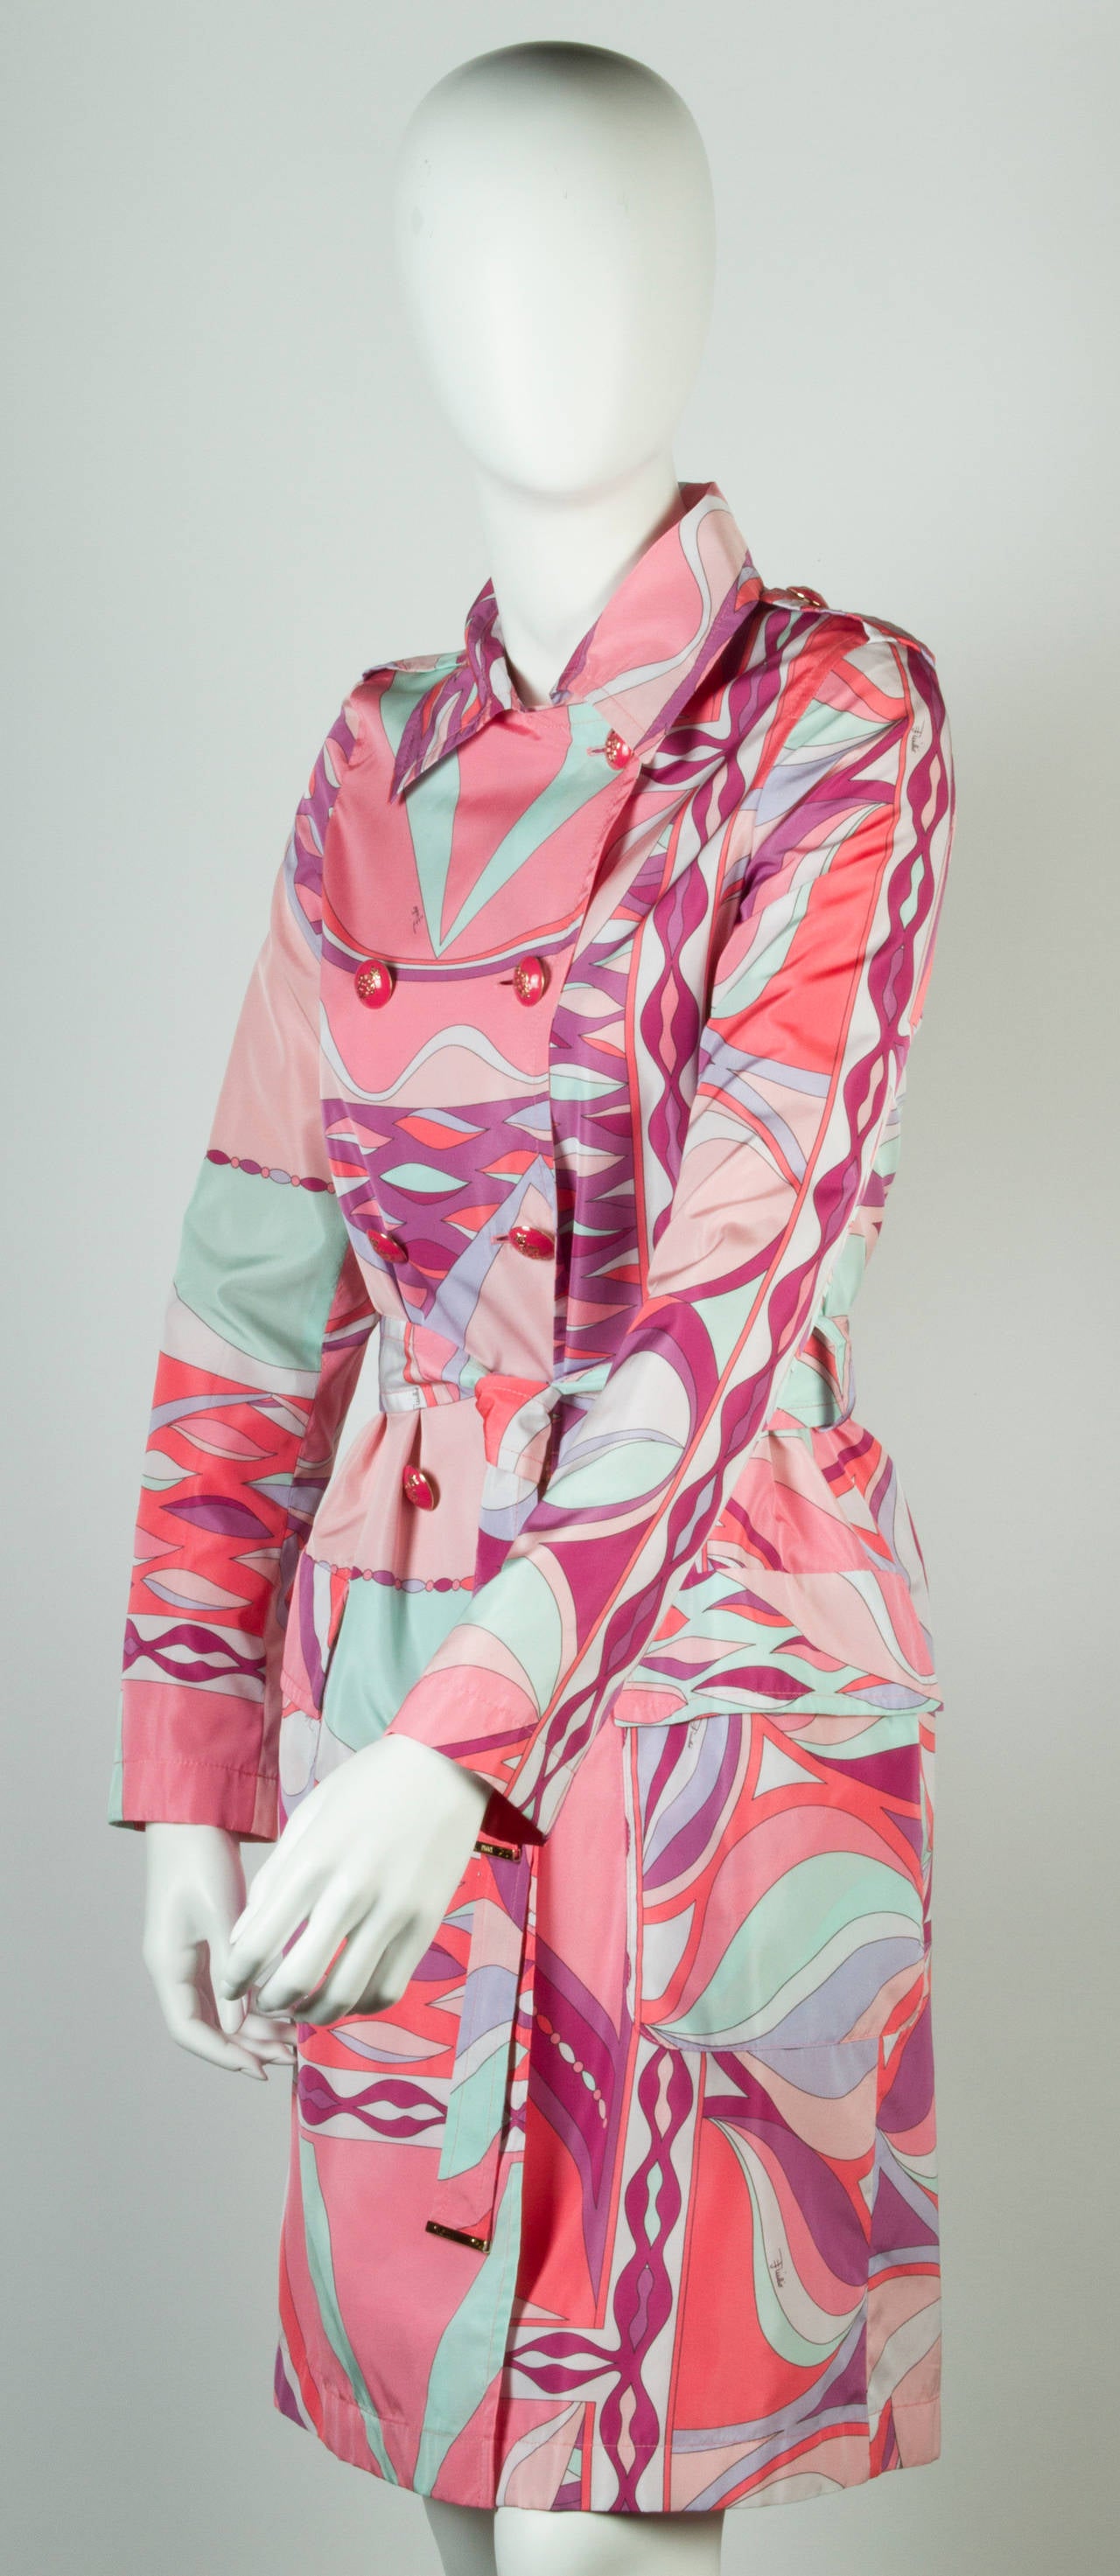 Women's Fun Emilio Pucci Mod Spring Raincoat